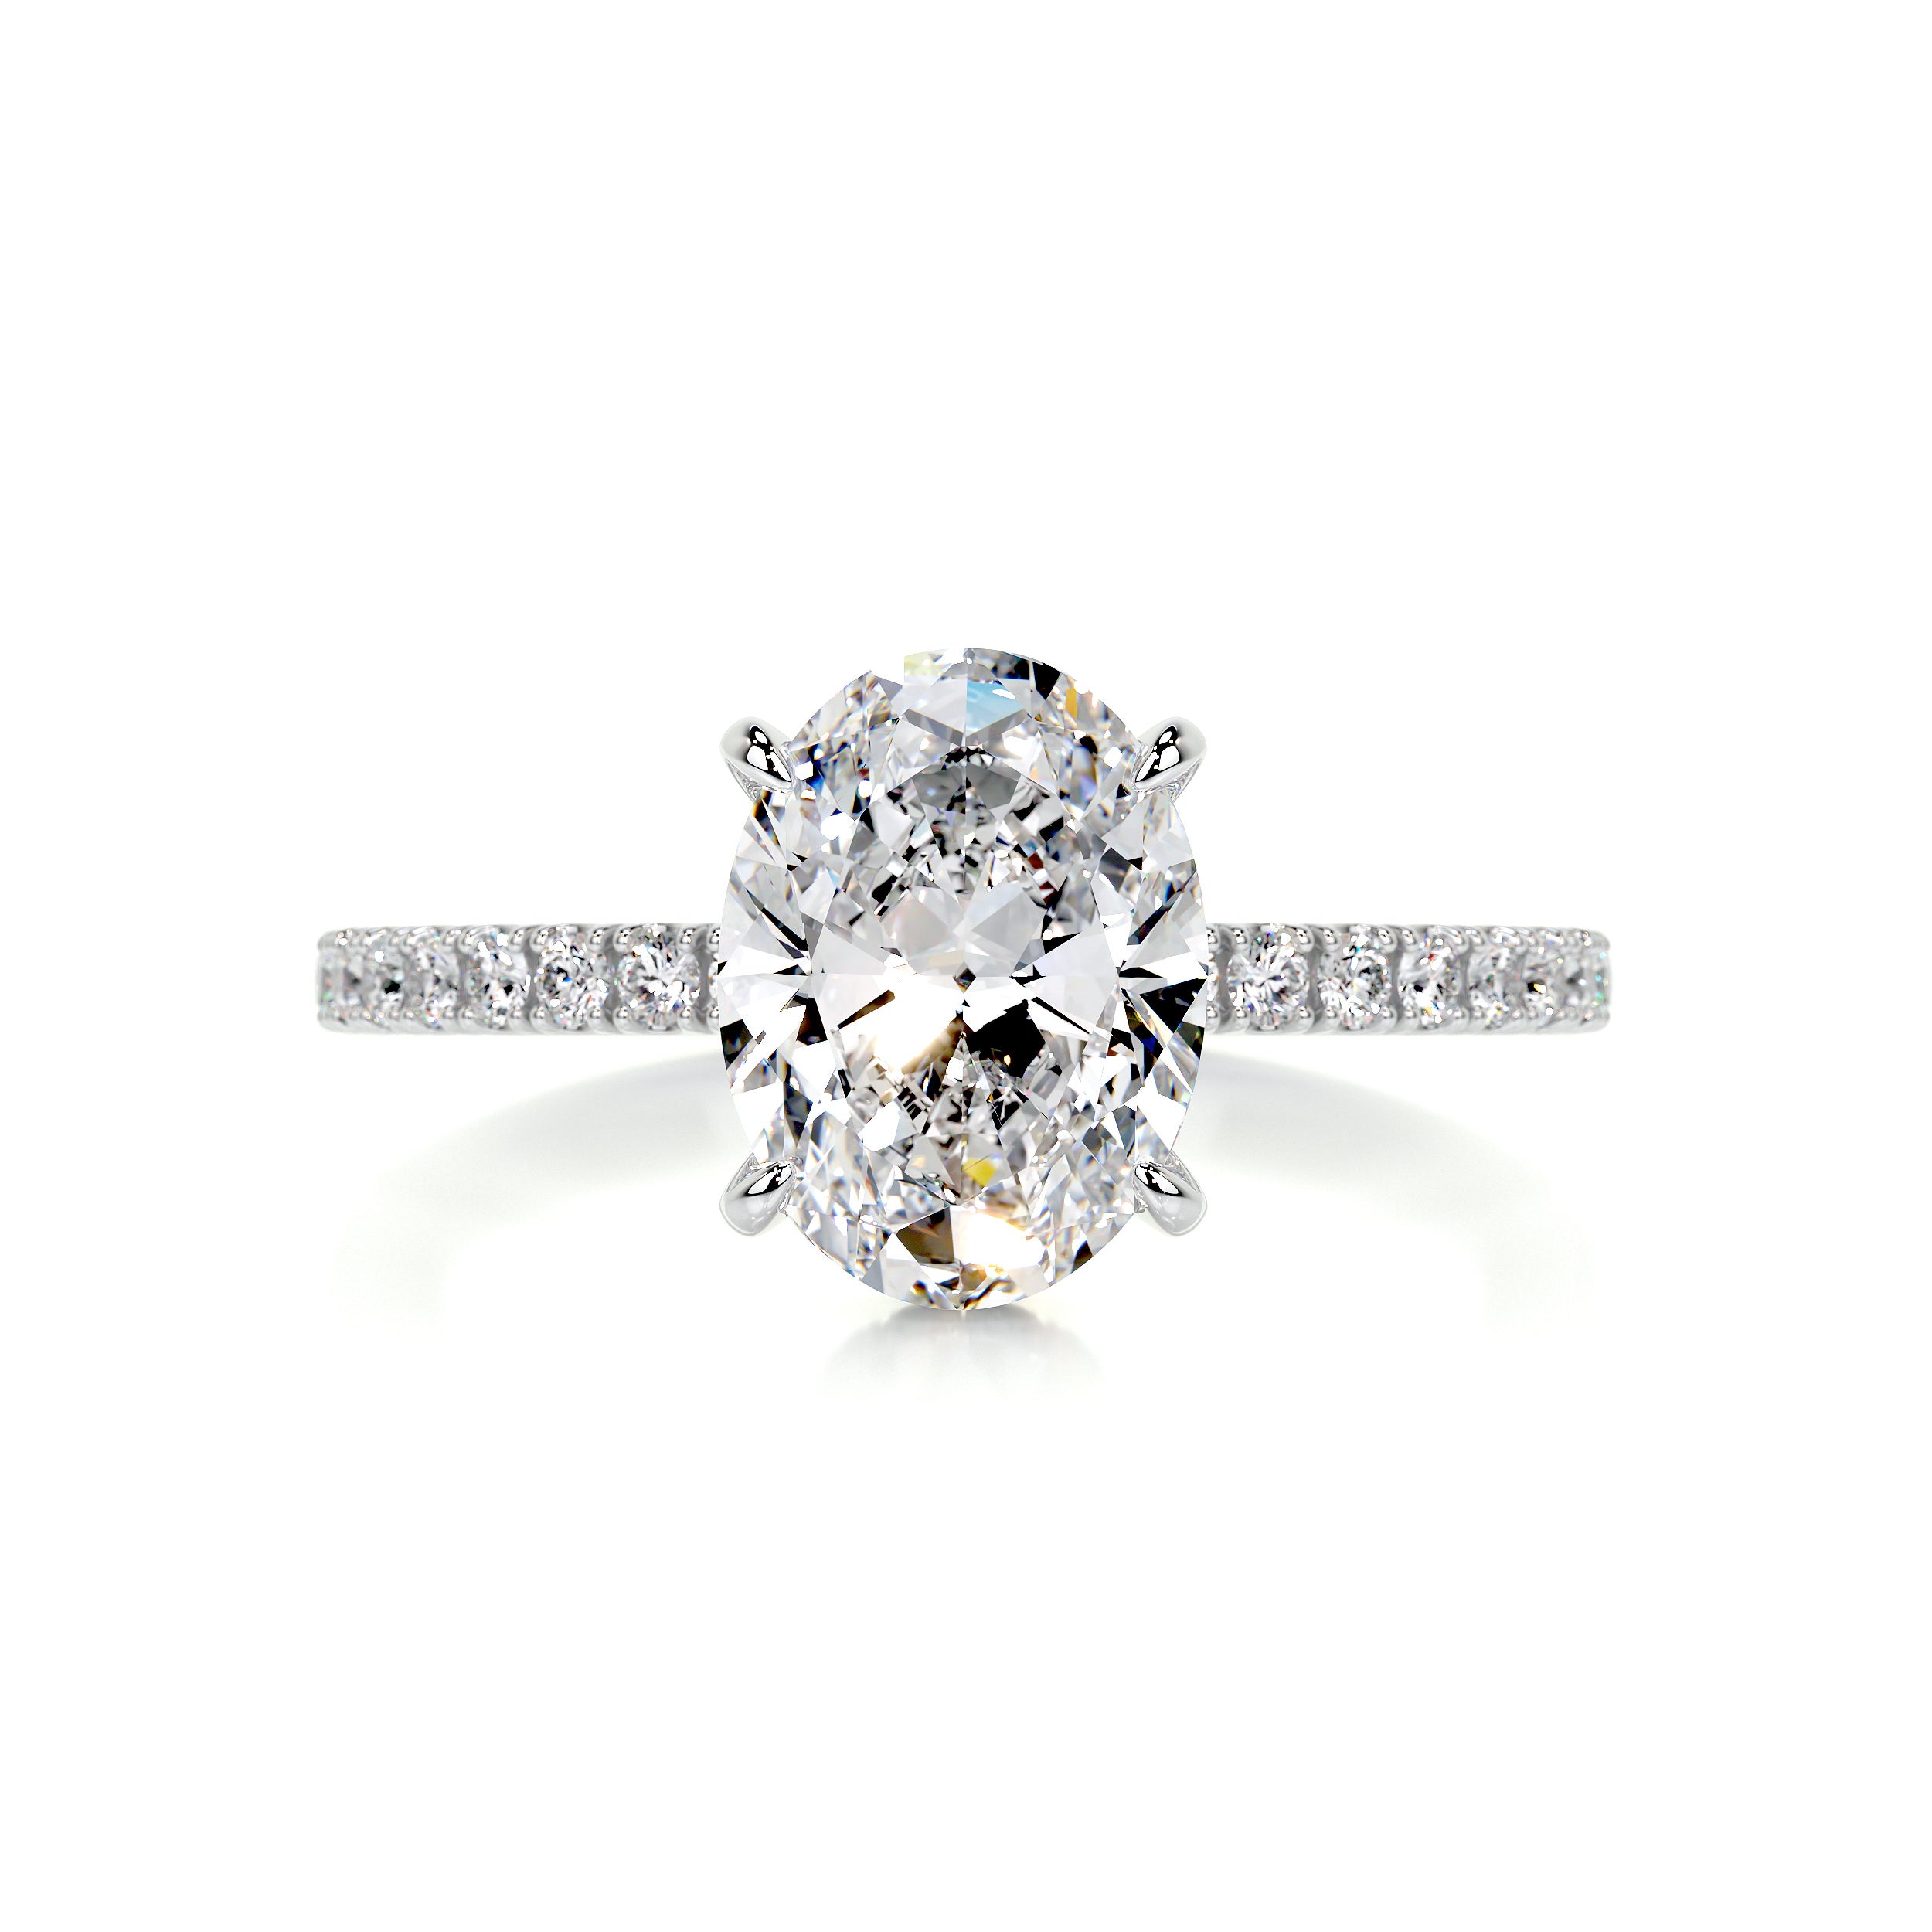 Lucy Diamond Engagement Ring   (2 Carat) -Platinum